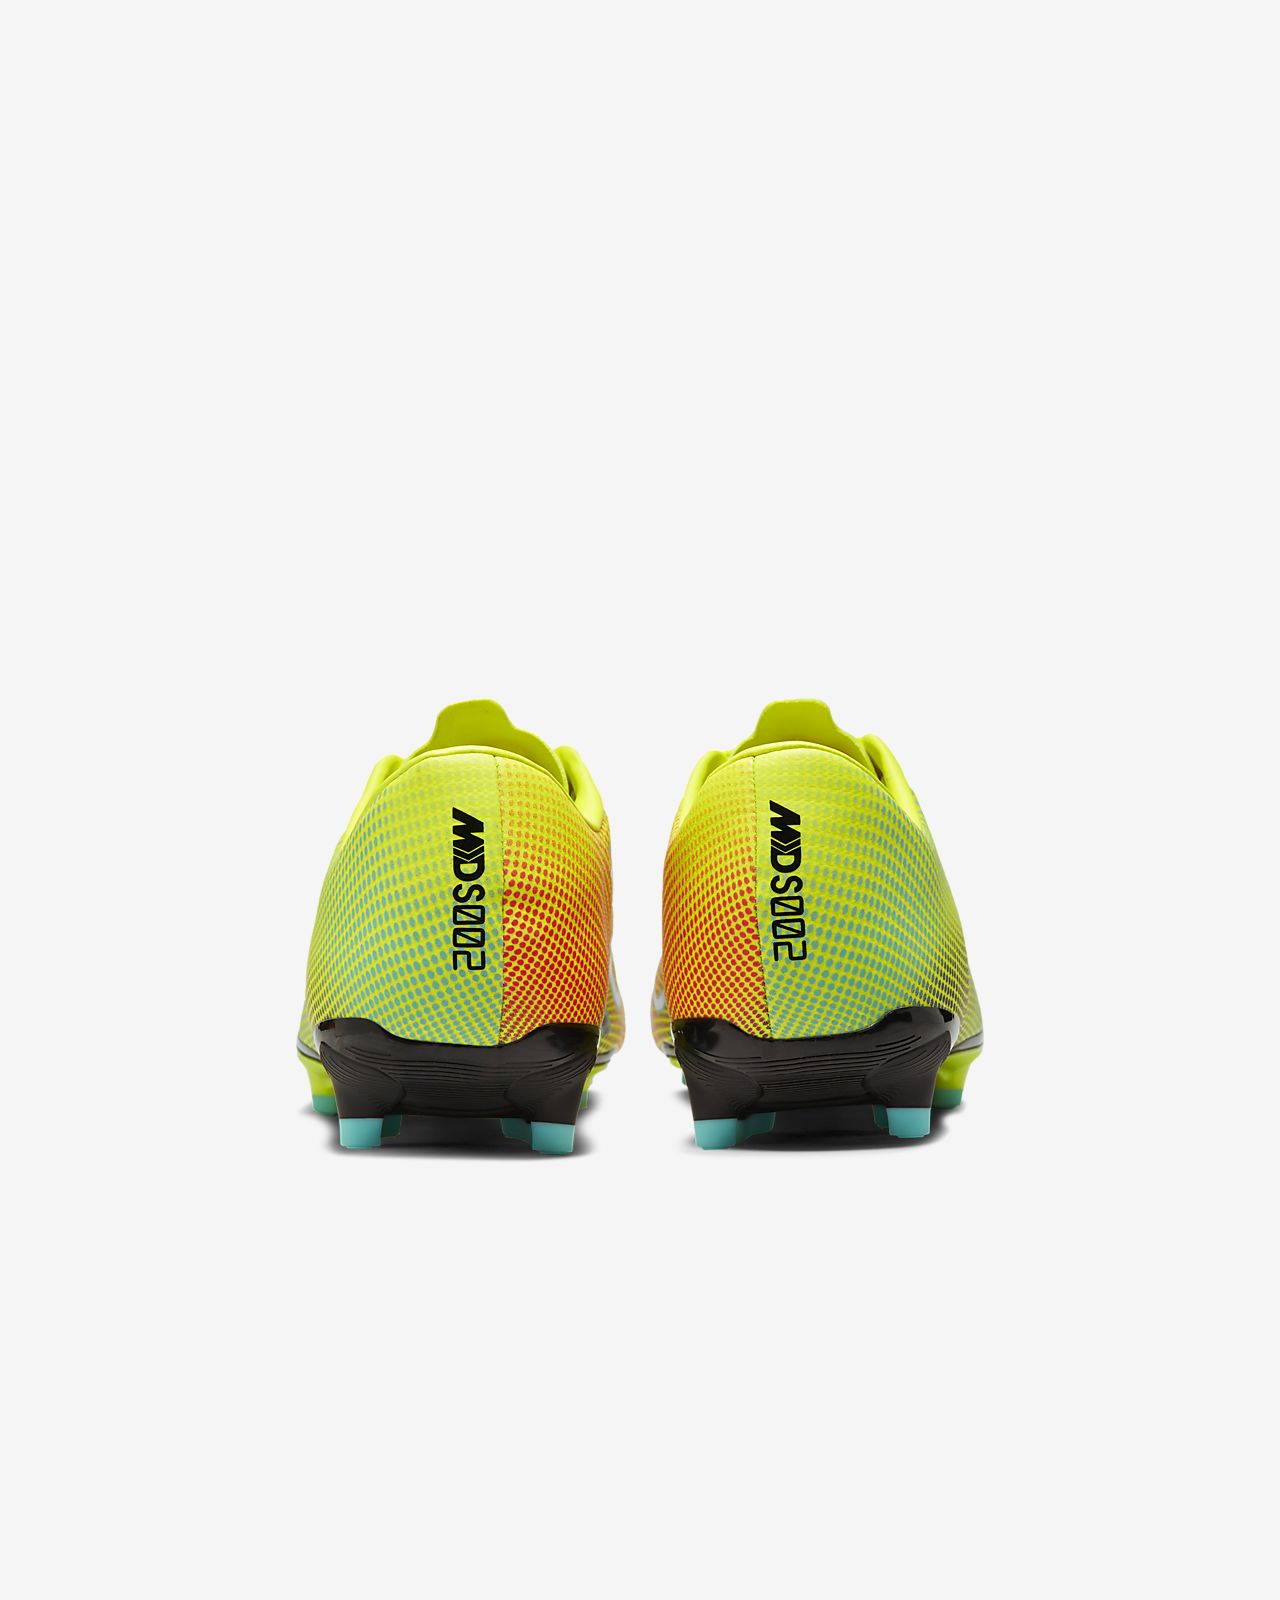 Nike Mercurial Vapor XIII Pro FG Pro Direct Soccer